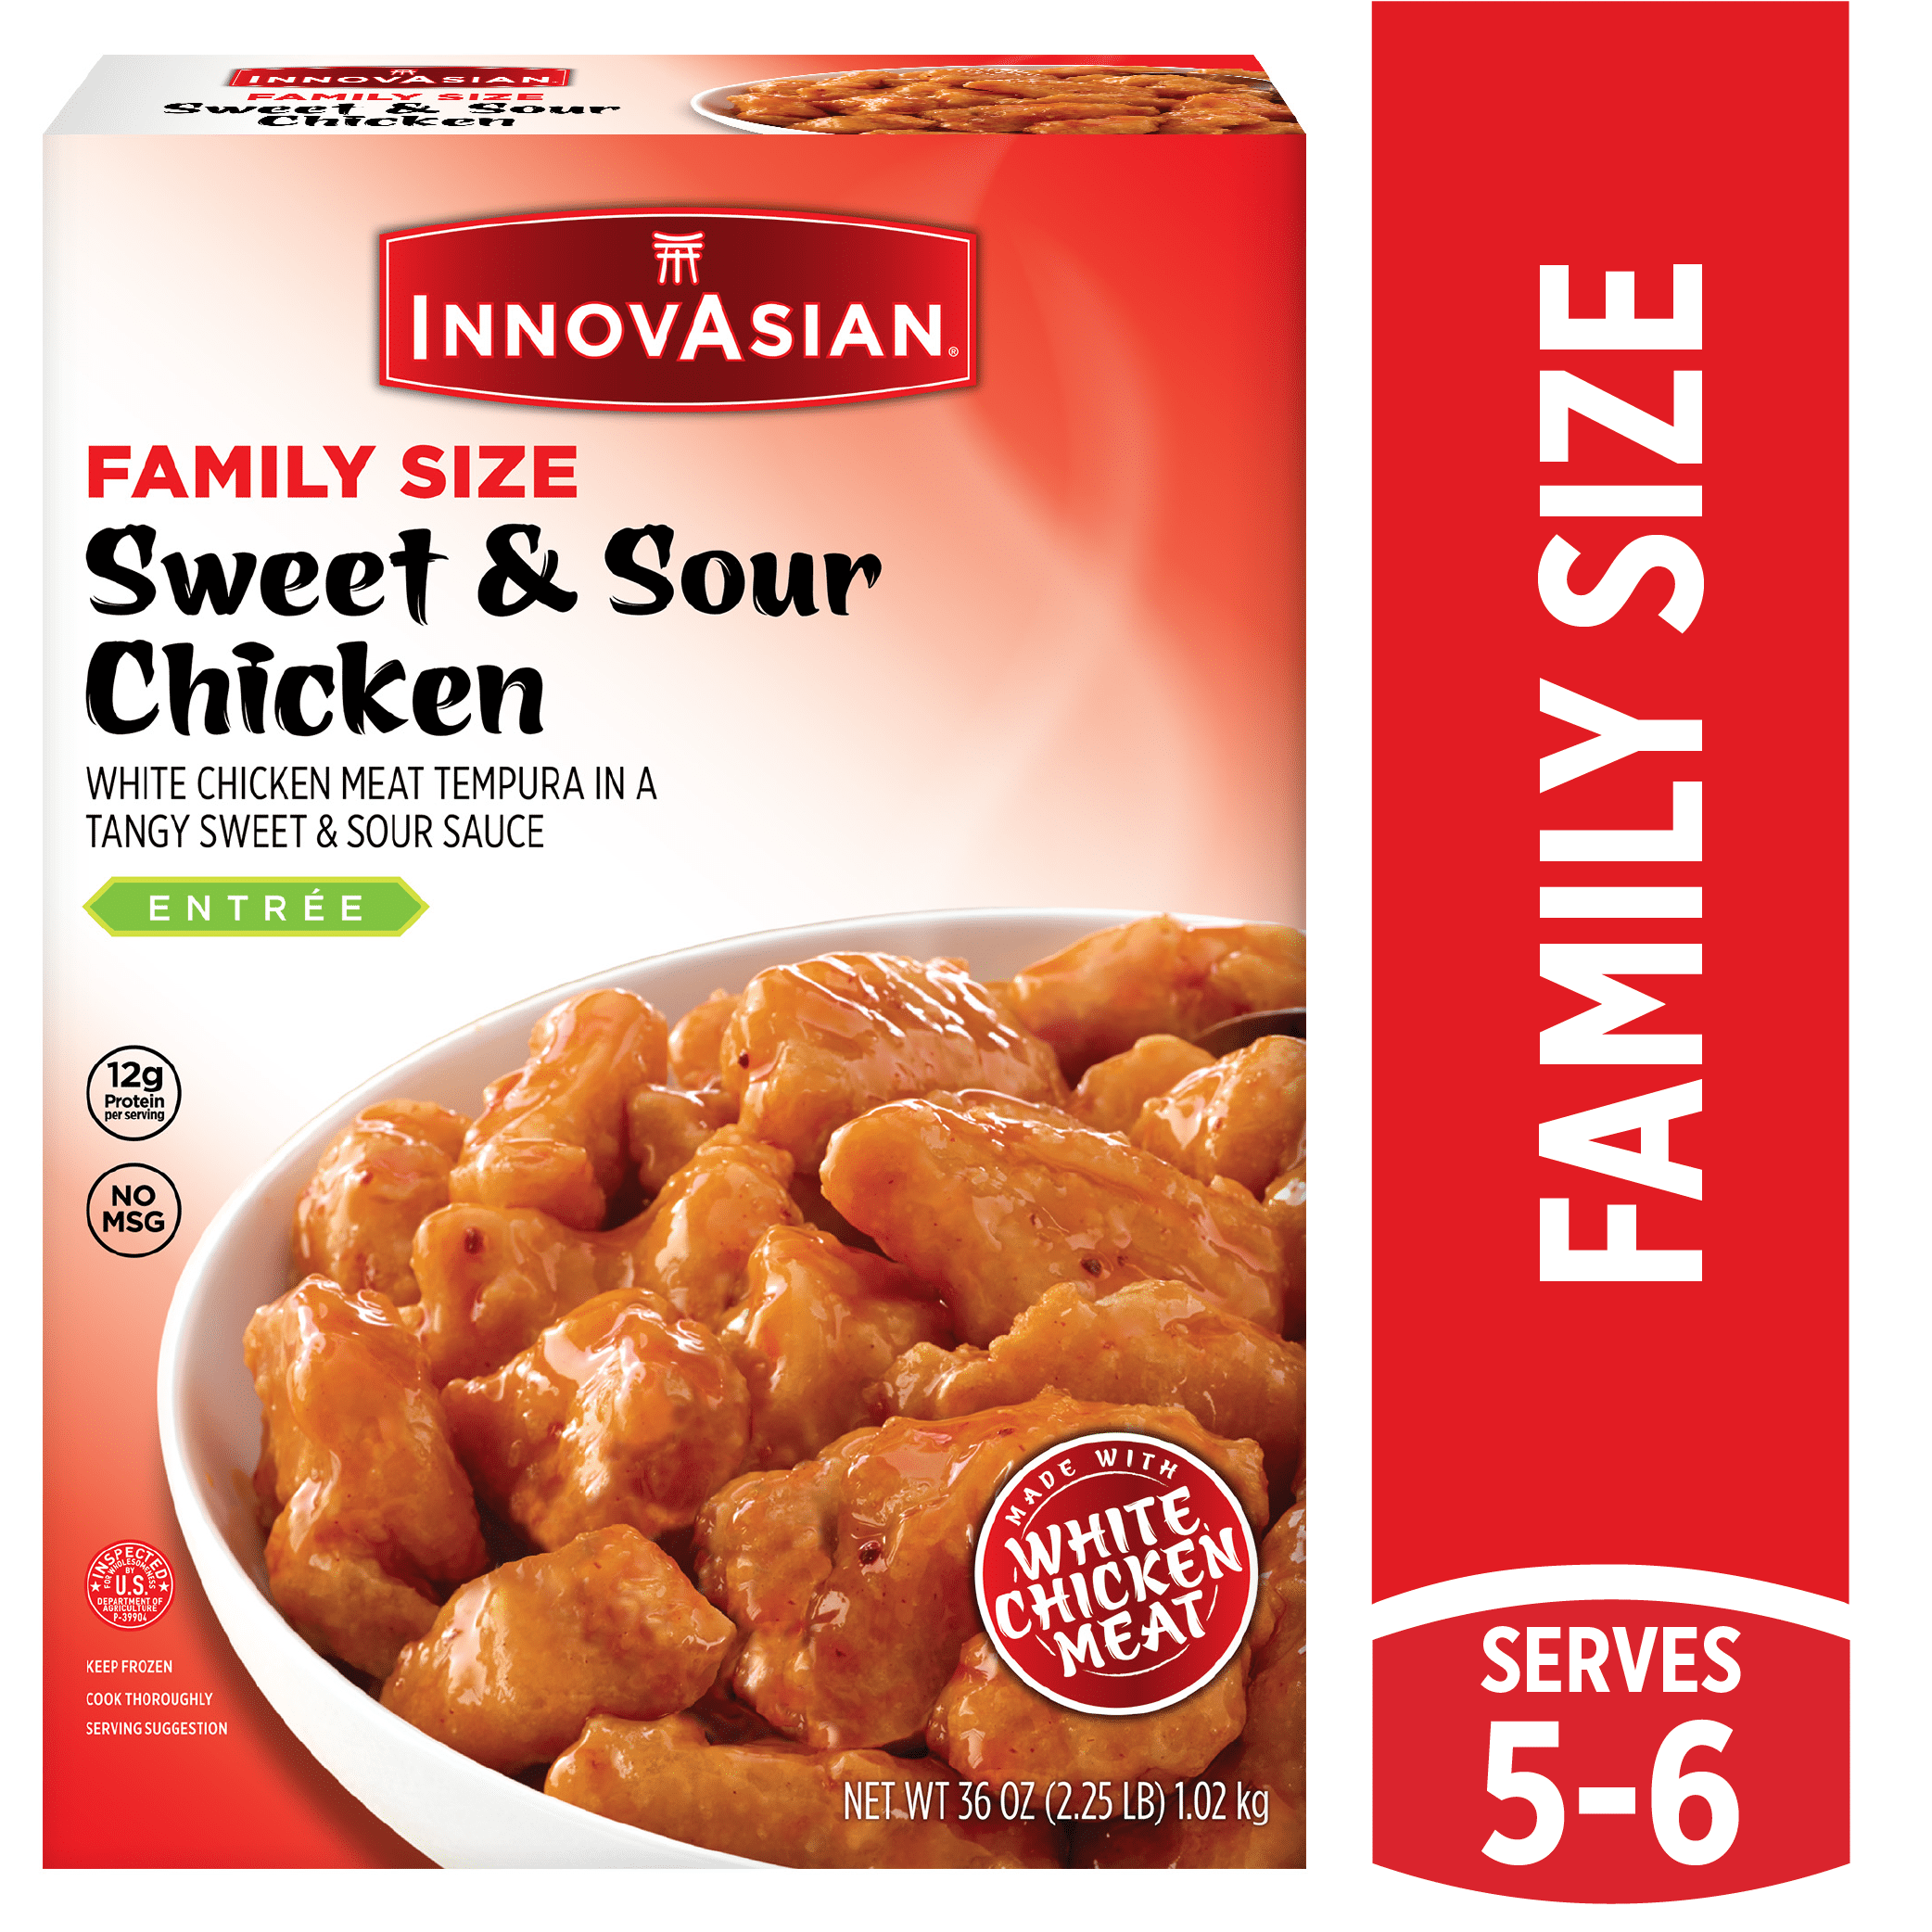 InnovAsian Sweet & Sour Chicken Meal, 36 oz (Frozen)